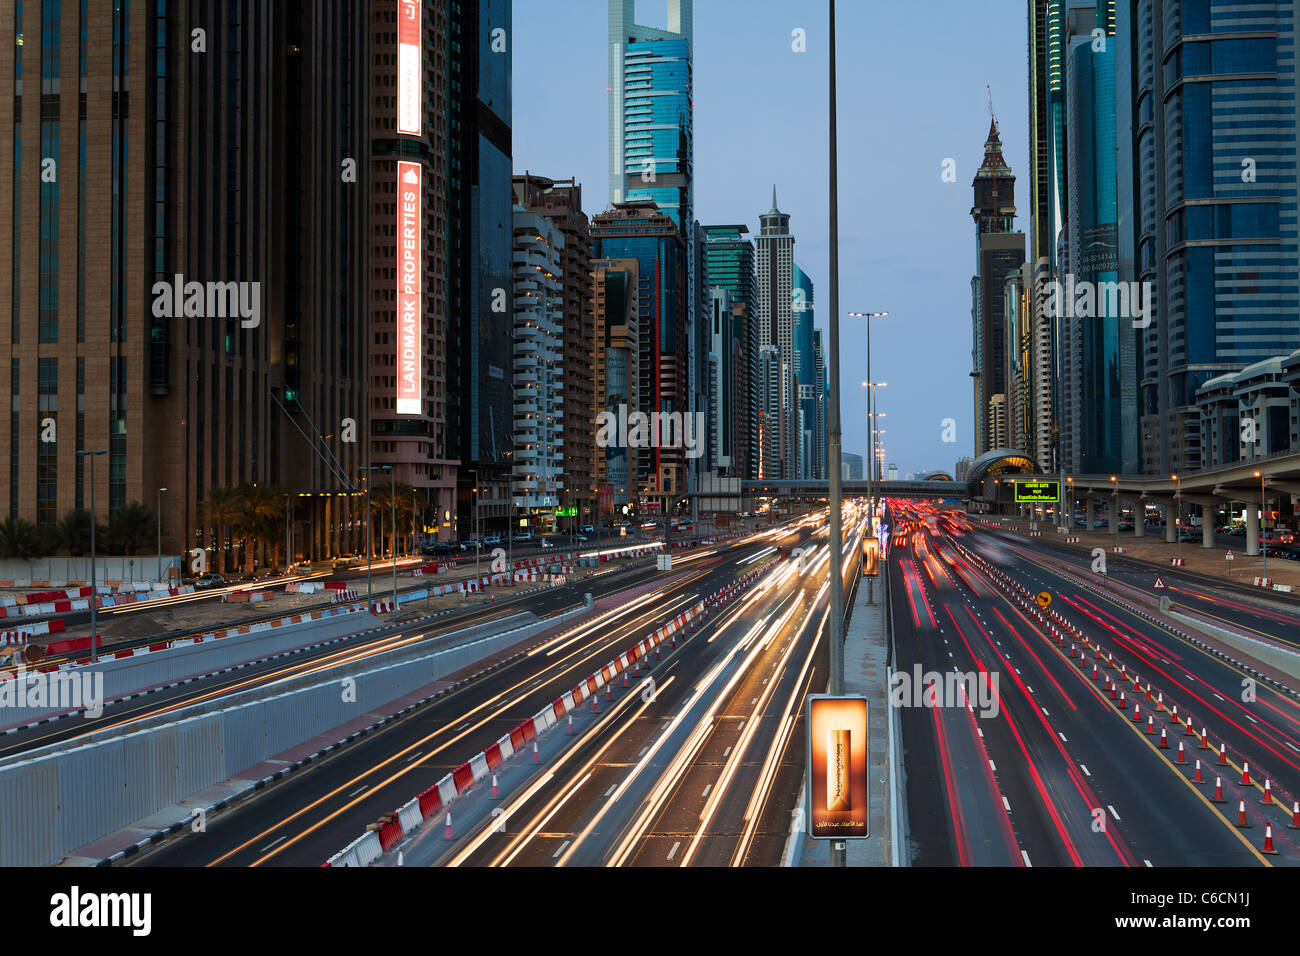 United Arab Emirates, Dubai, Sheikh Zayed Road, traffic and new high rise buildings along Dubai's main road Stock Photo